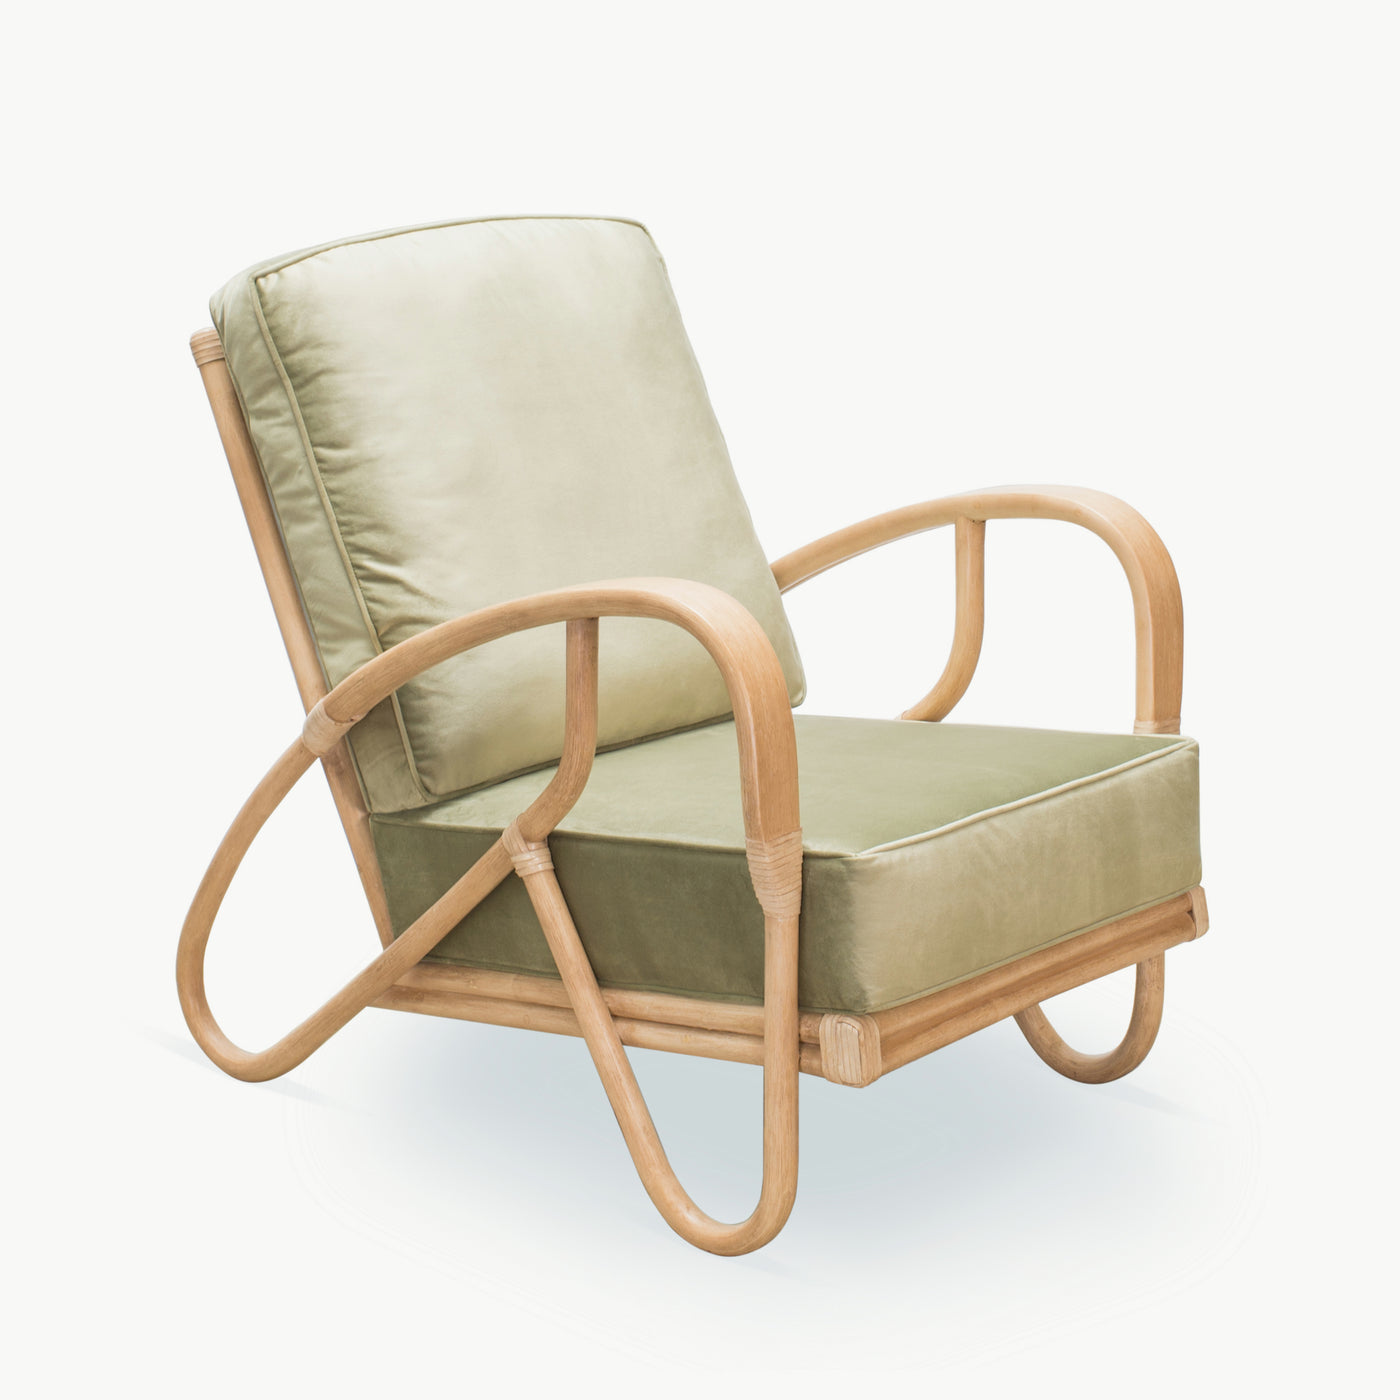 THE MAVERICK Cane Chair - Olive